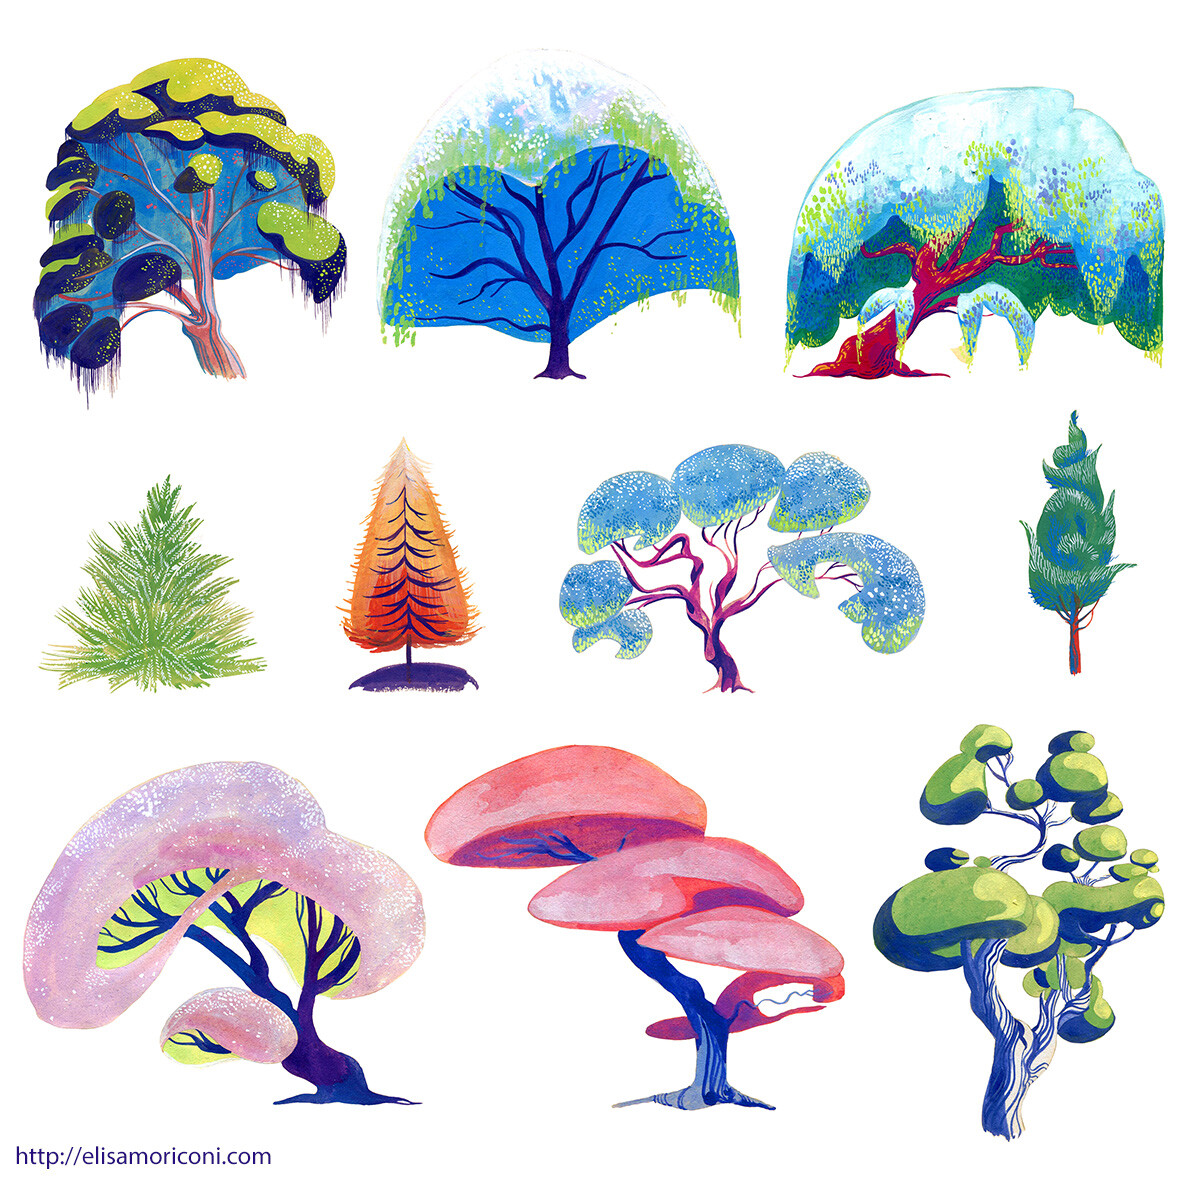 Trees studies